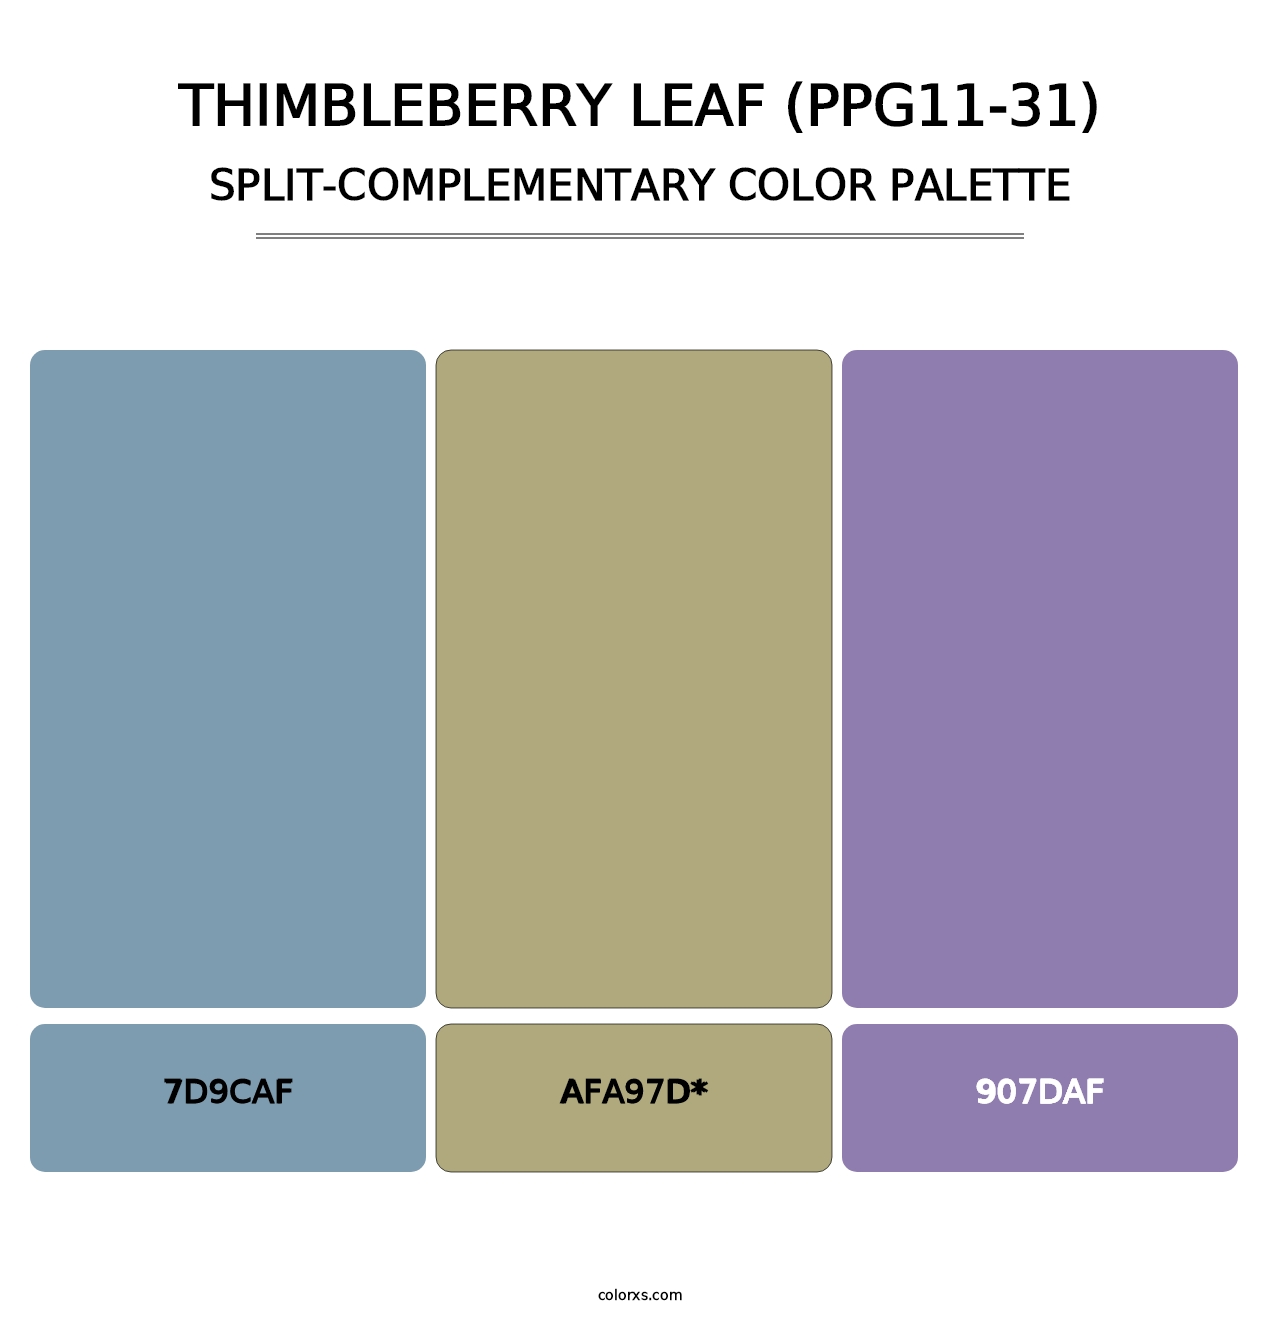 Thimbleberry Leaf (PPG11-31) - Split-Complementary Color Palette